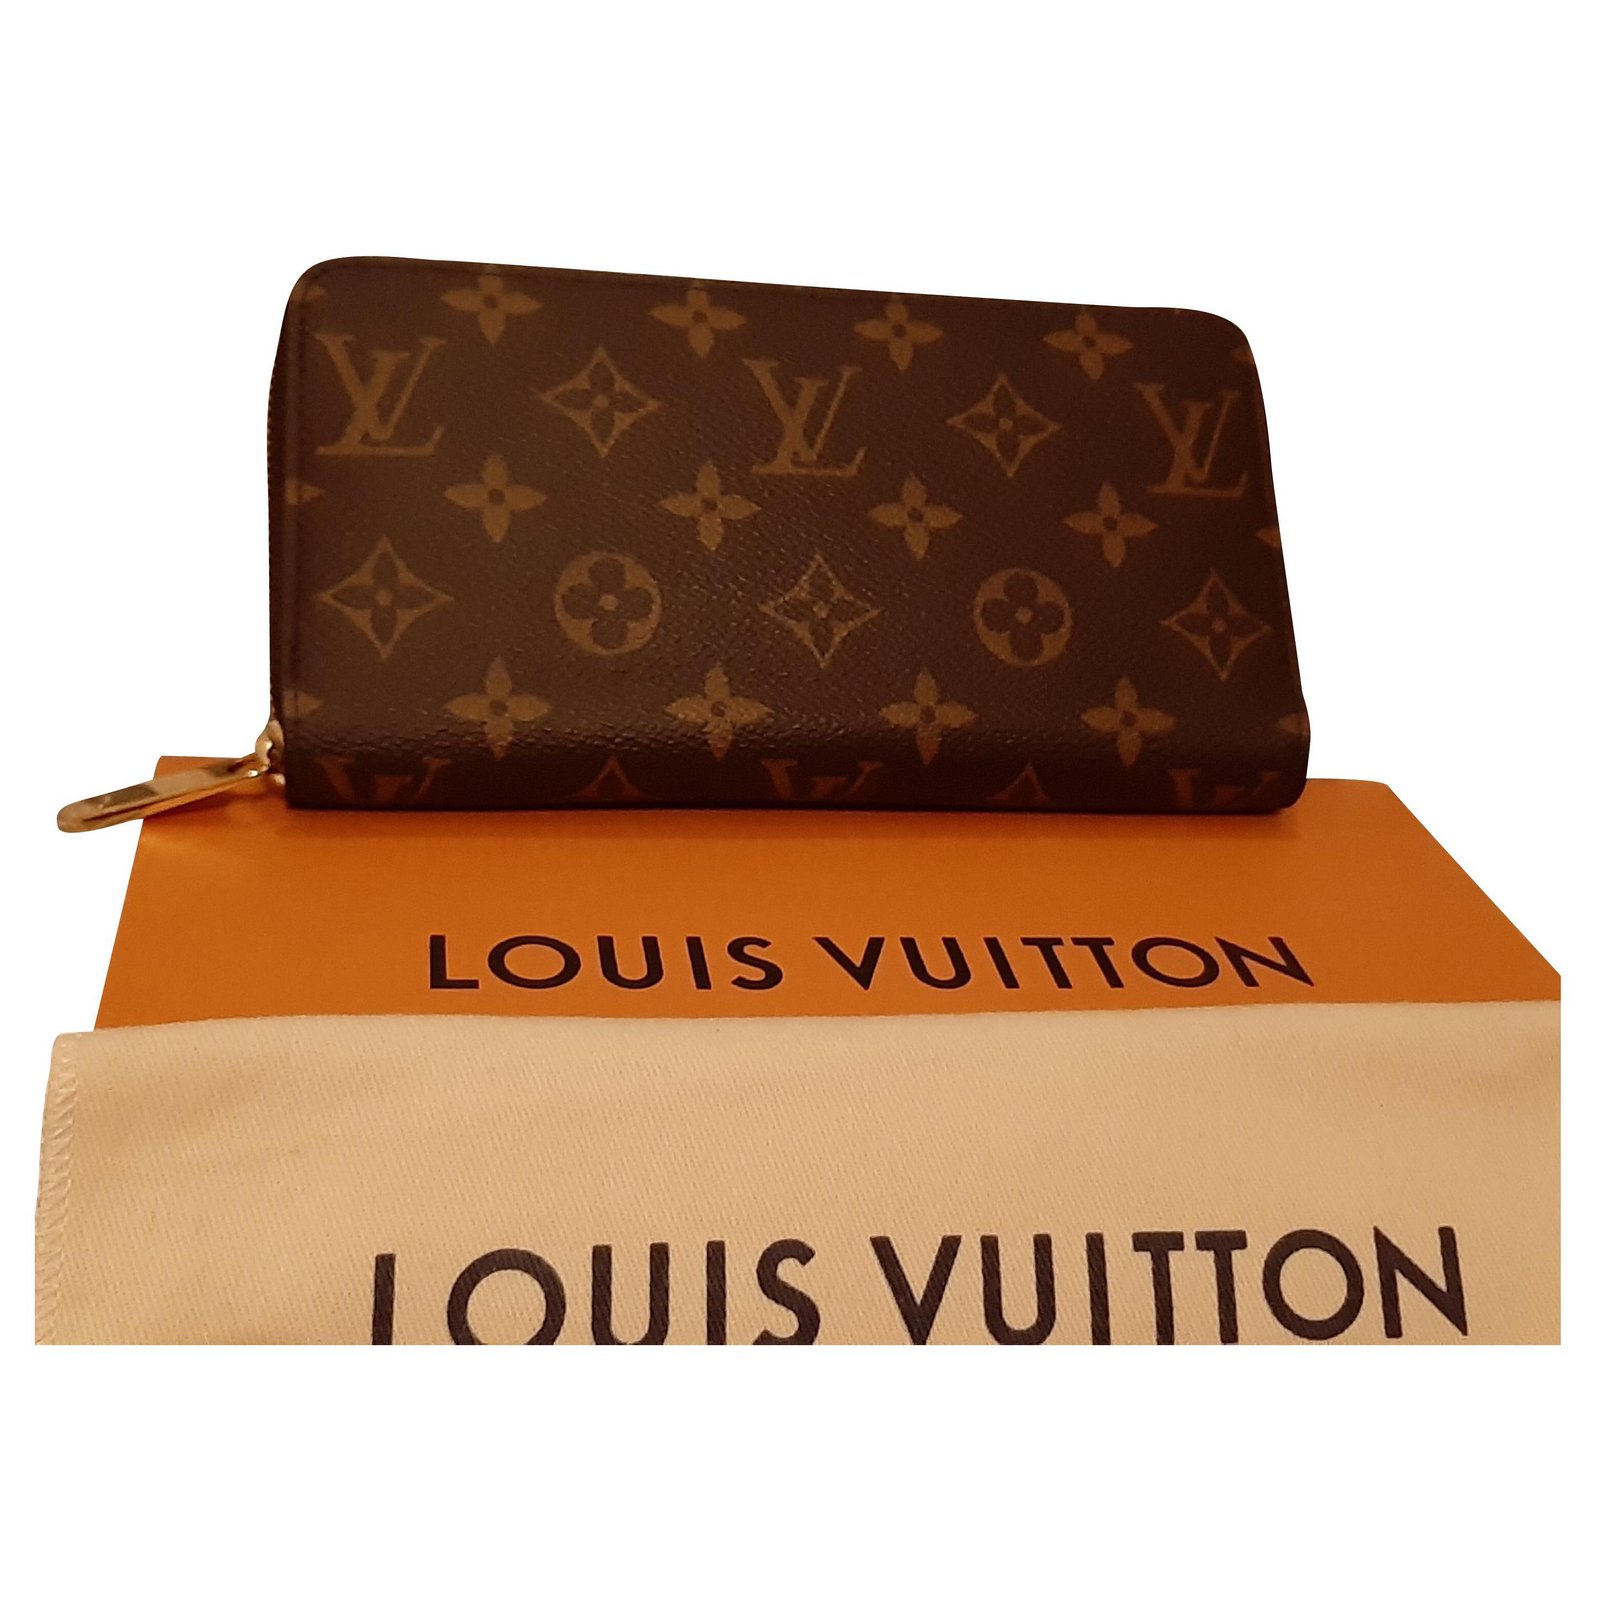 louis vuitton bag with wallet set